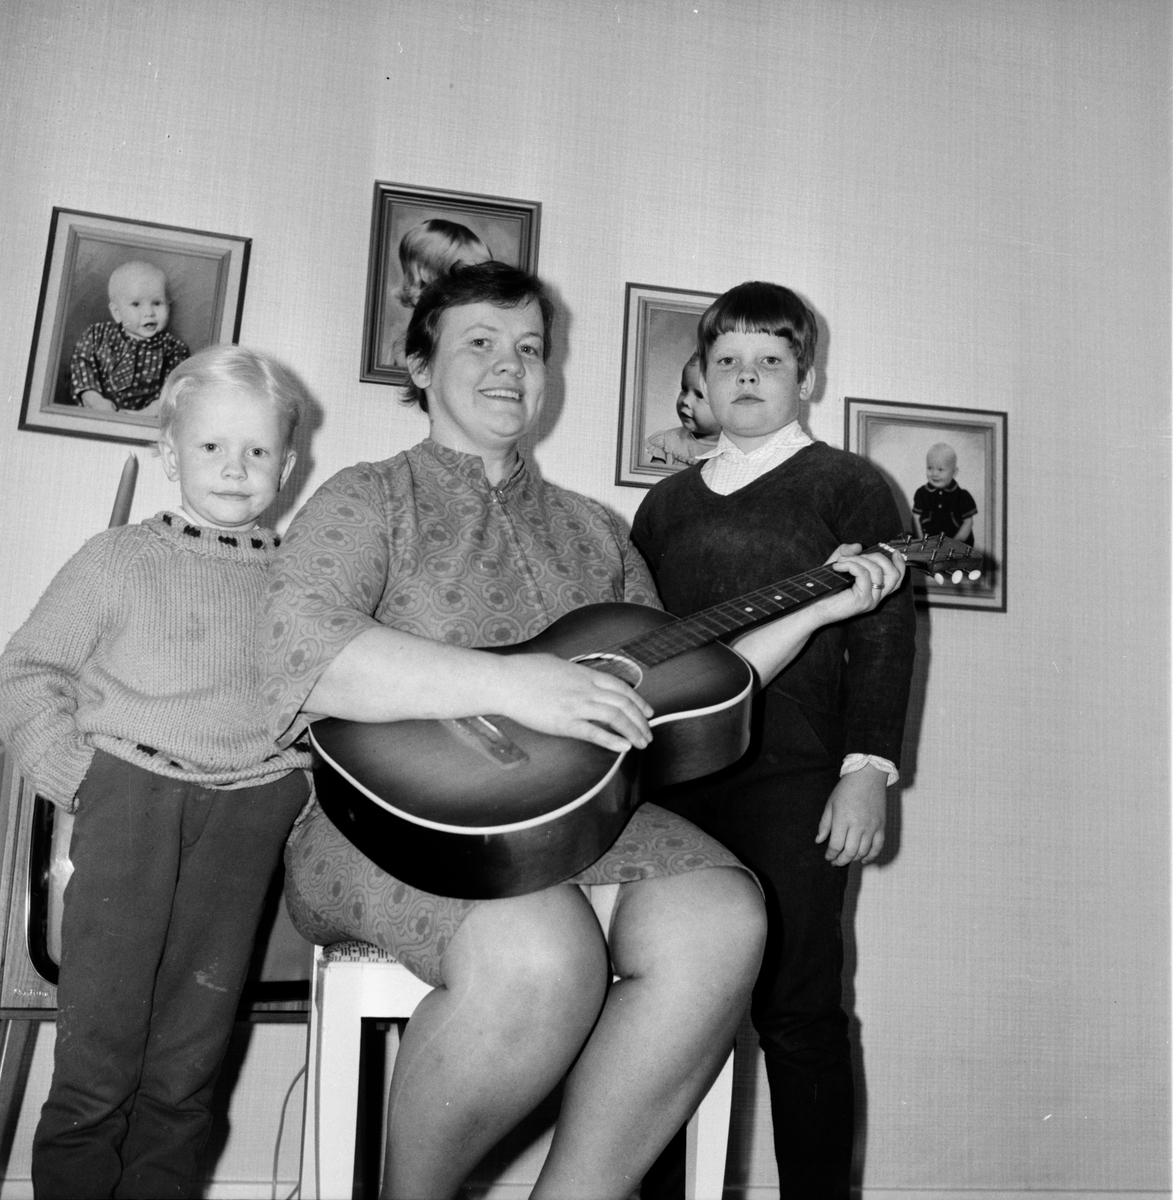 Lingbo, Finnés slår igen. Mats, Marianne och Benny Hedström.
24 April 1969.